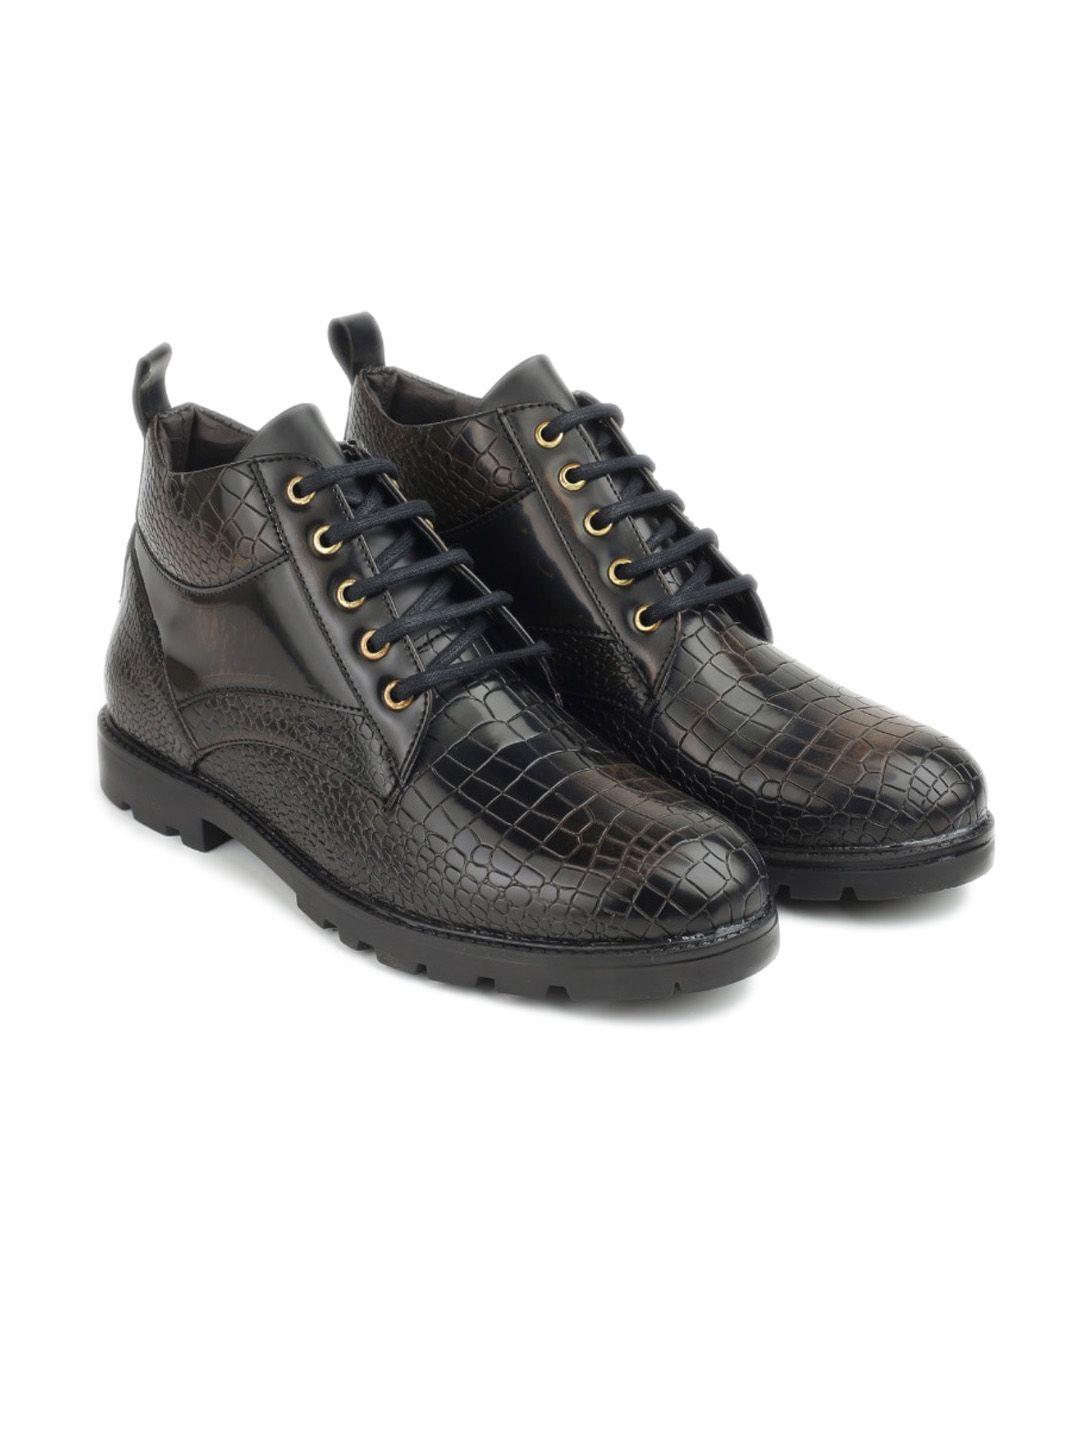 shozania men mid top textured leather regular boots